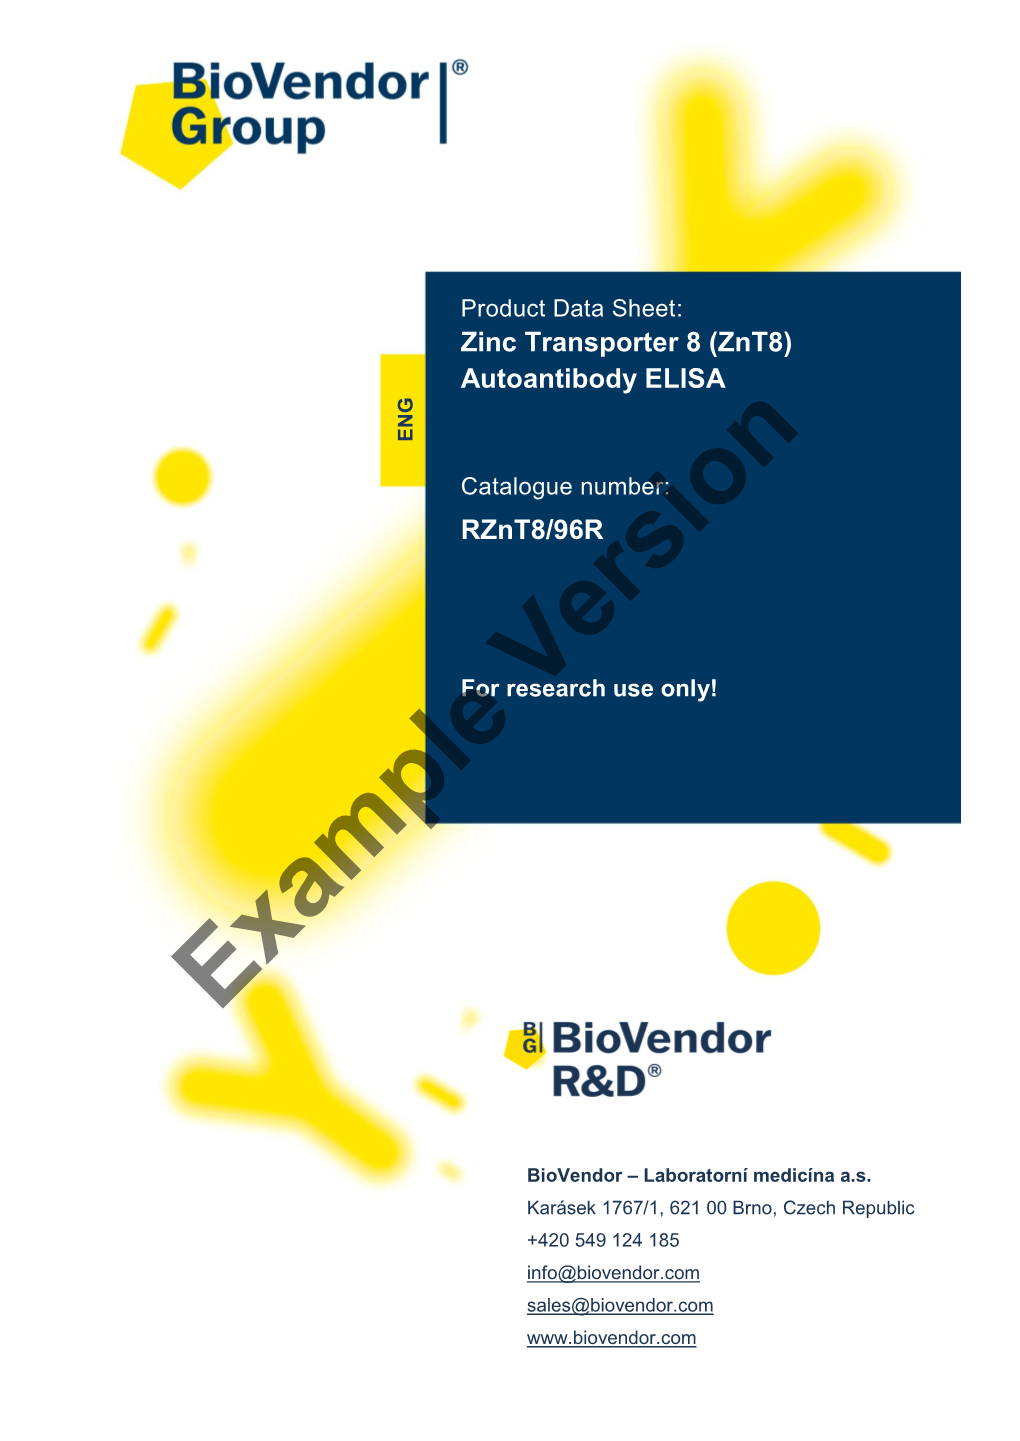 Zinc Transporter 8 (Znt8) Autoantibody ELISA